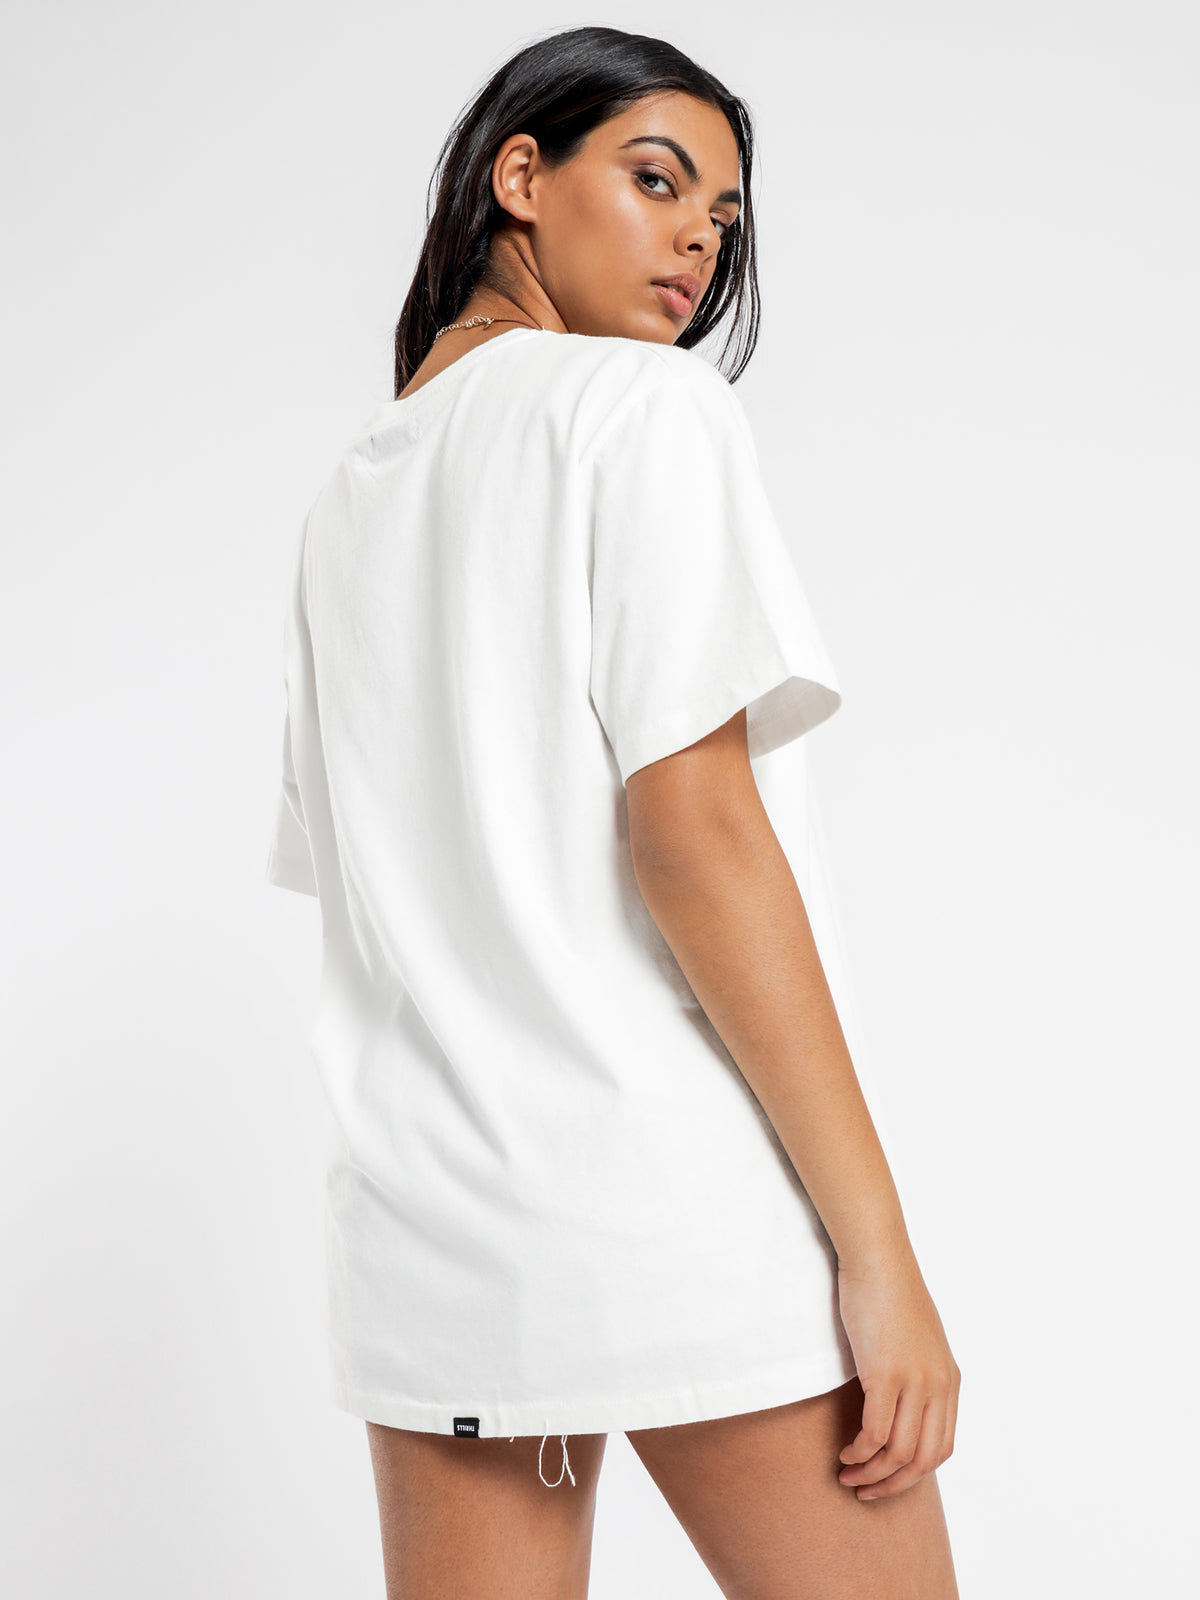 Mania Merch T-Shirt in Dirty White